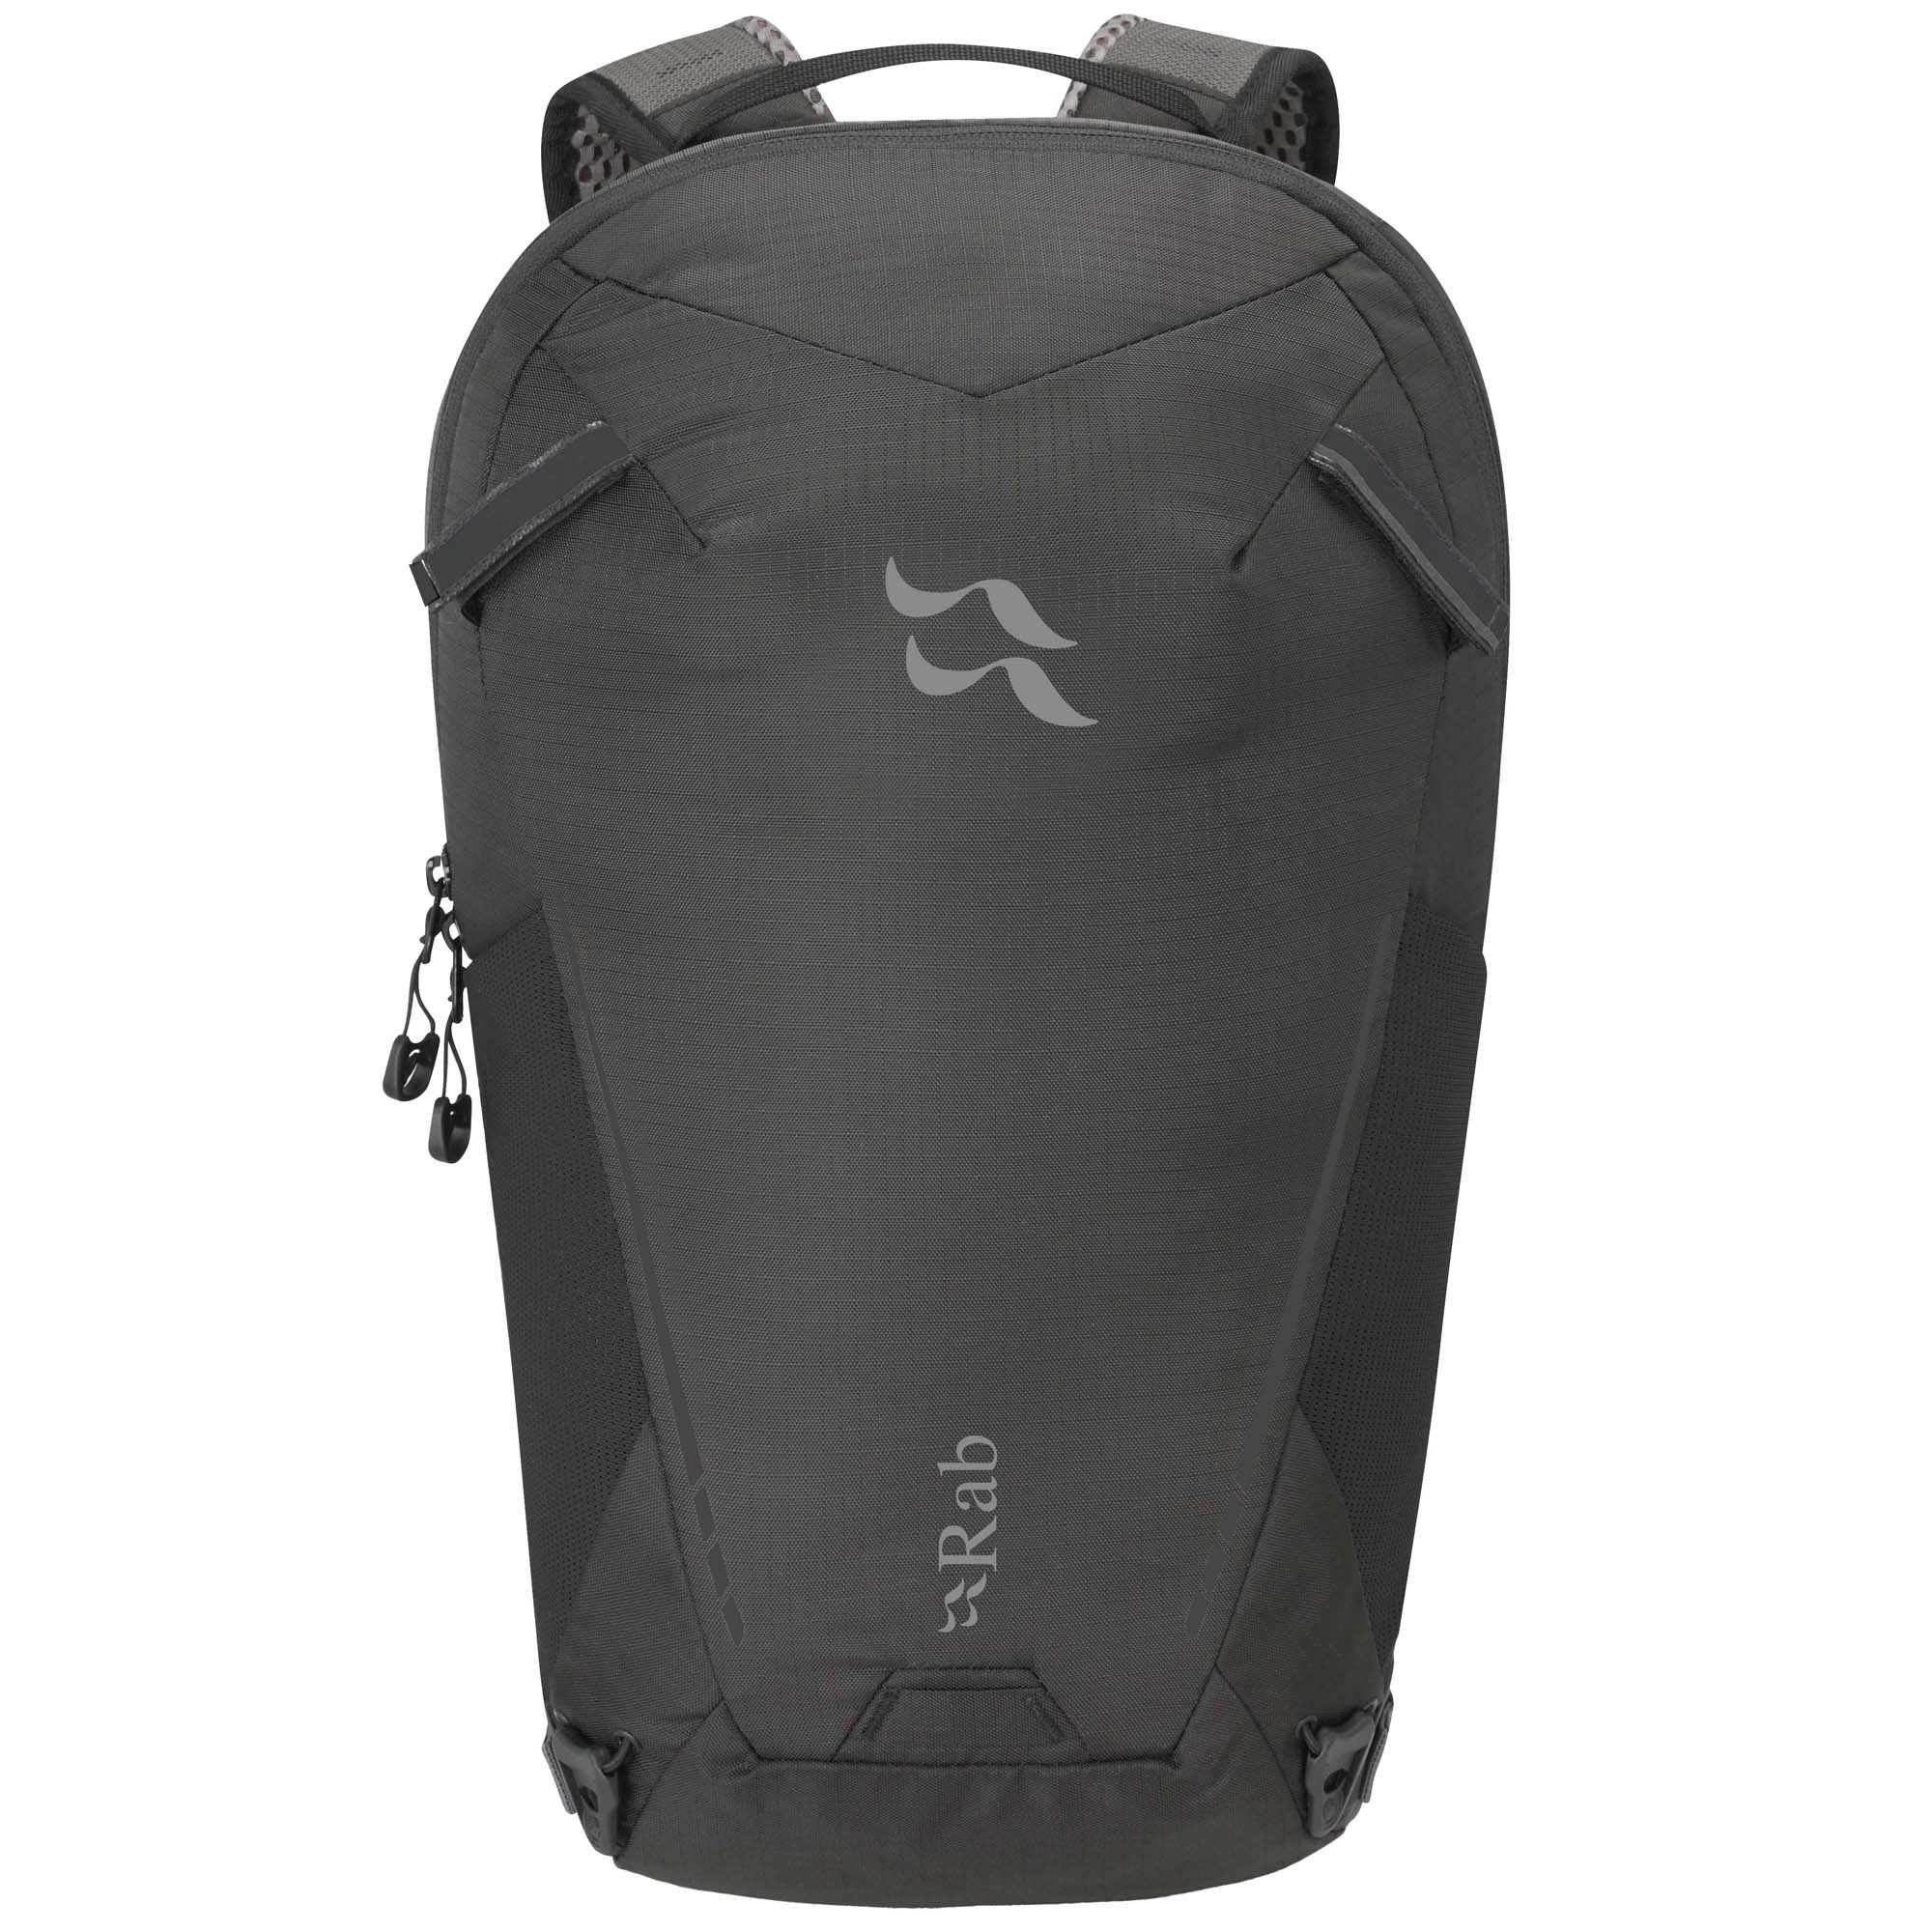 Rab Tensor 15 Lightweight Hiking Backpack